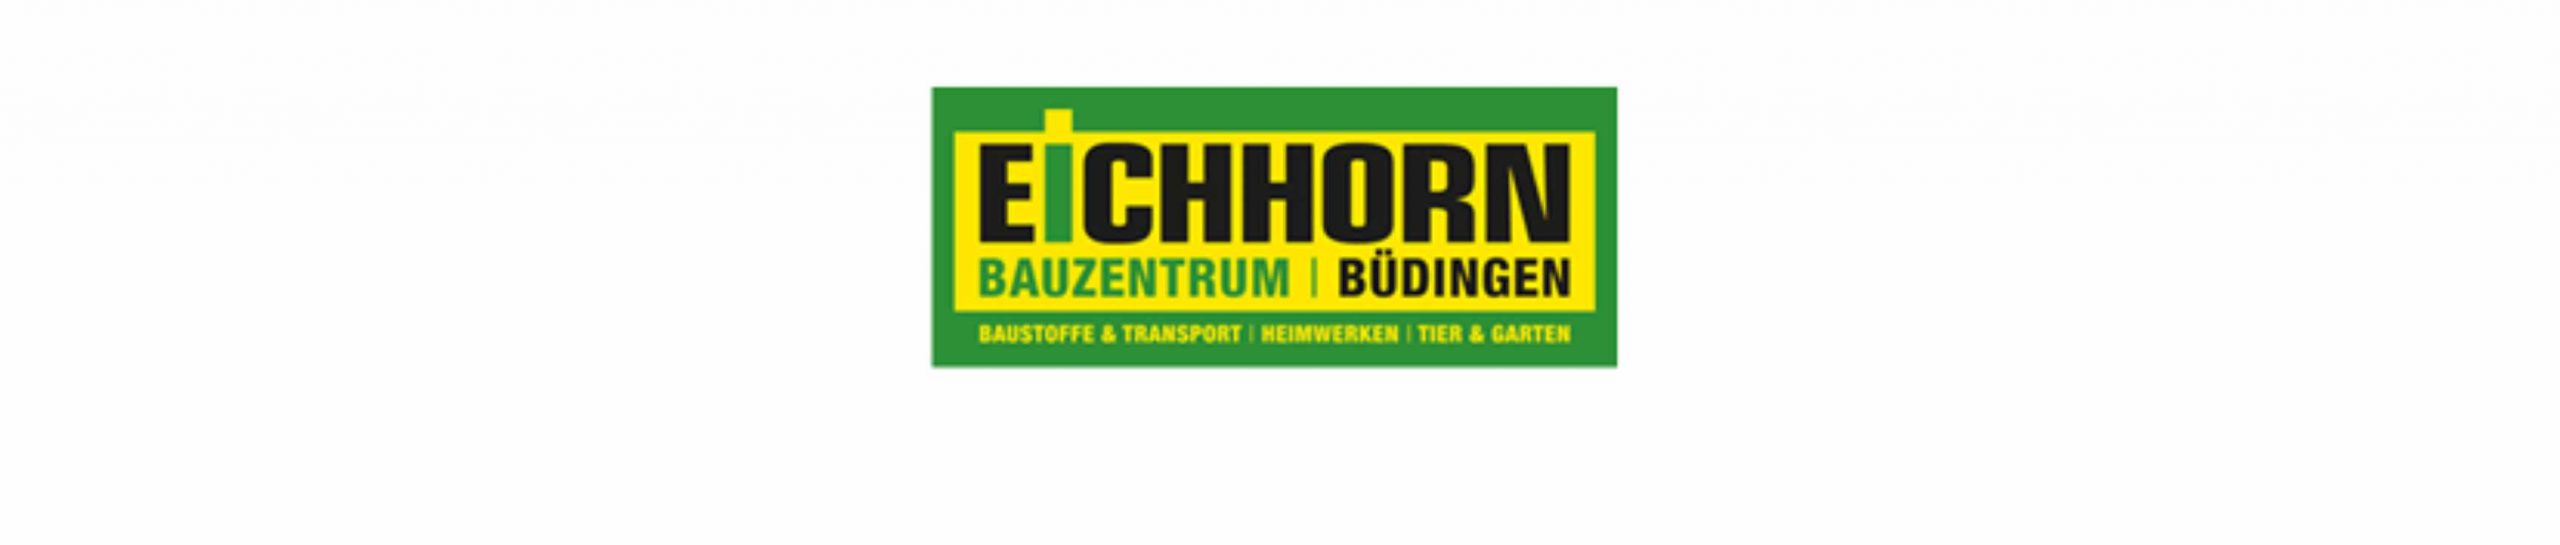 Eichhorn AG Bauzentrum - Büdingen